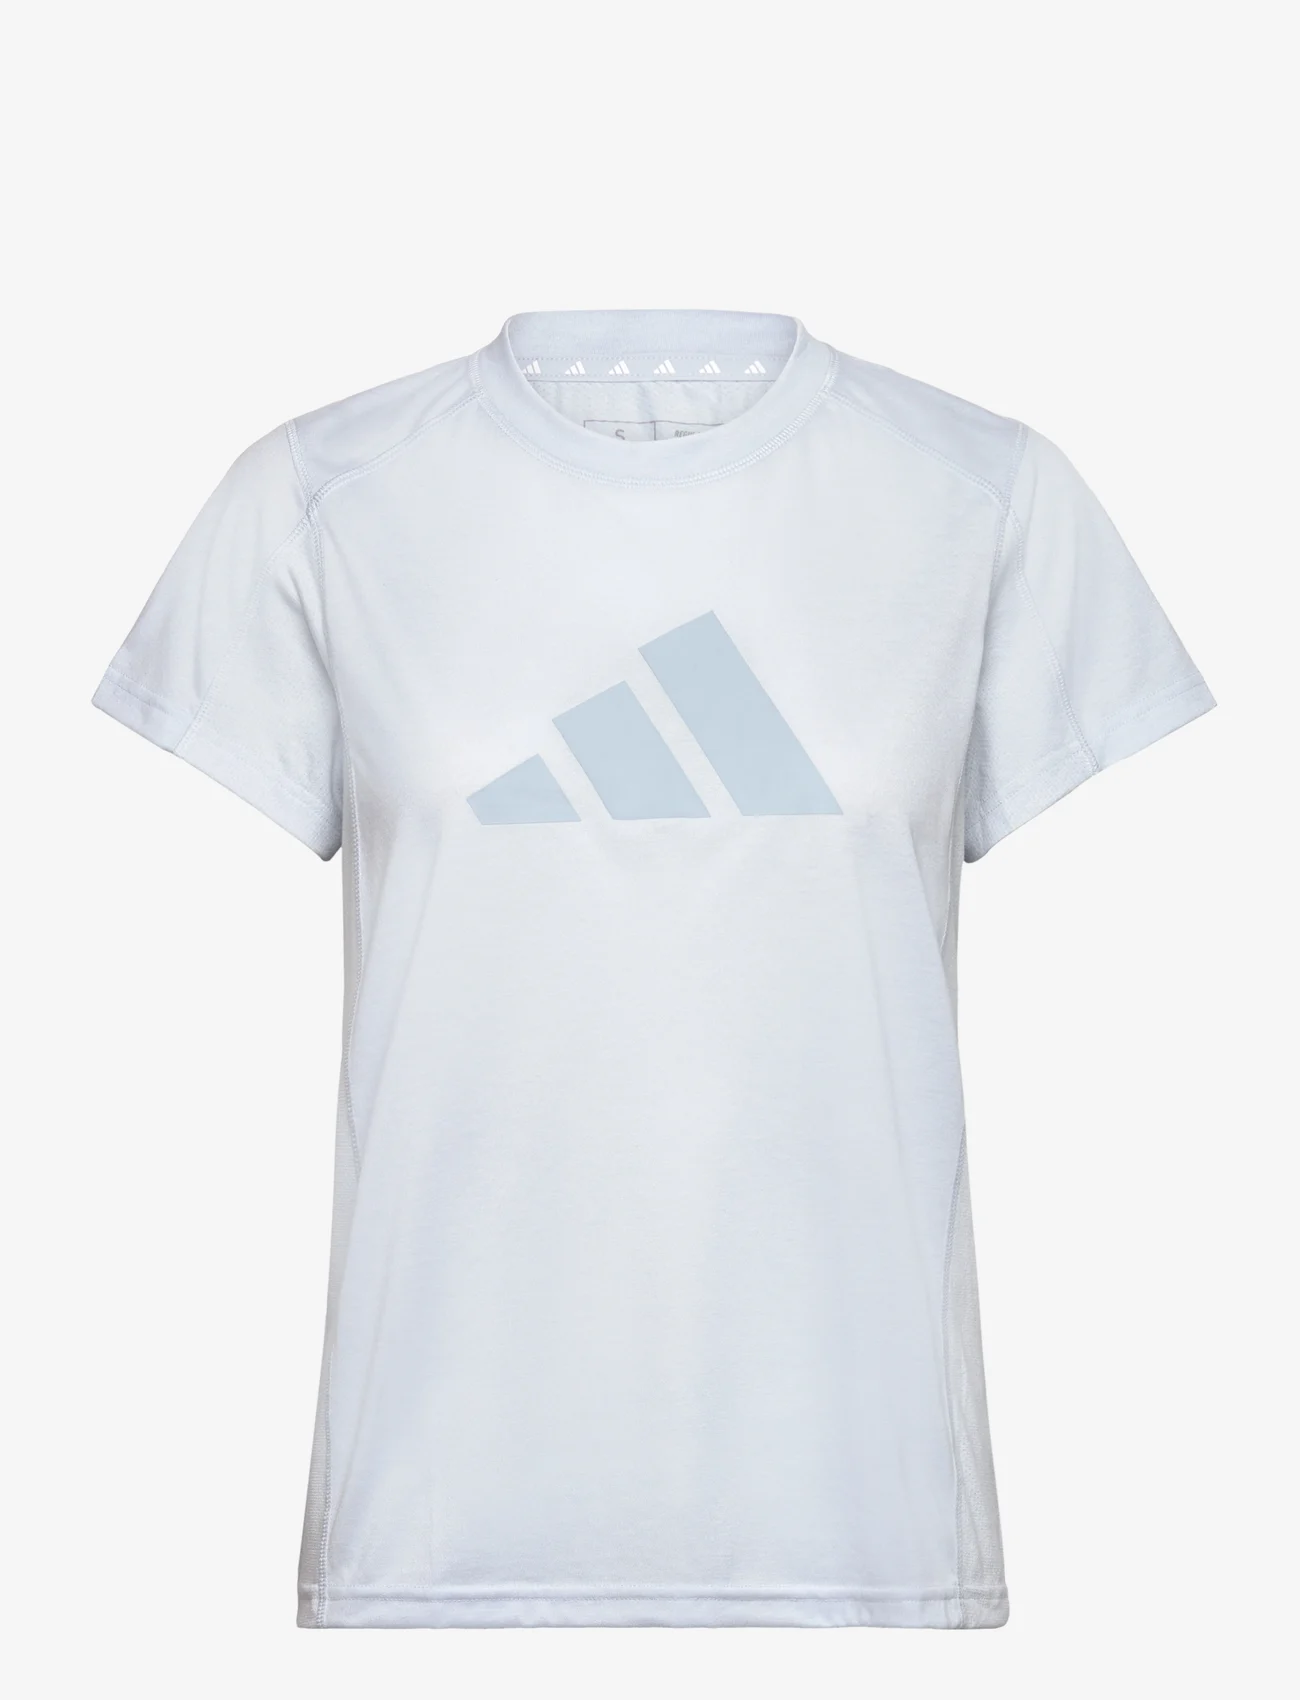 adidas Performance - TR-ES LOGO T - t-shirts - halblu/wonblu - 0